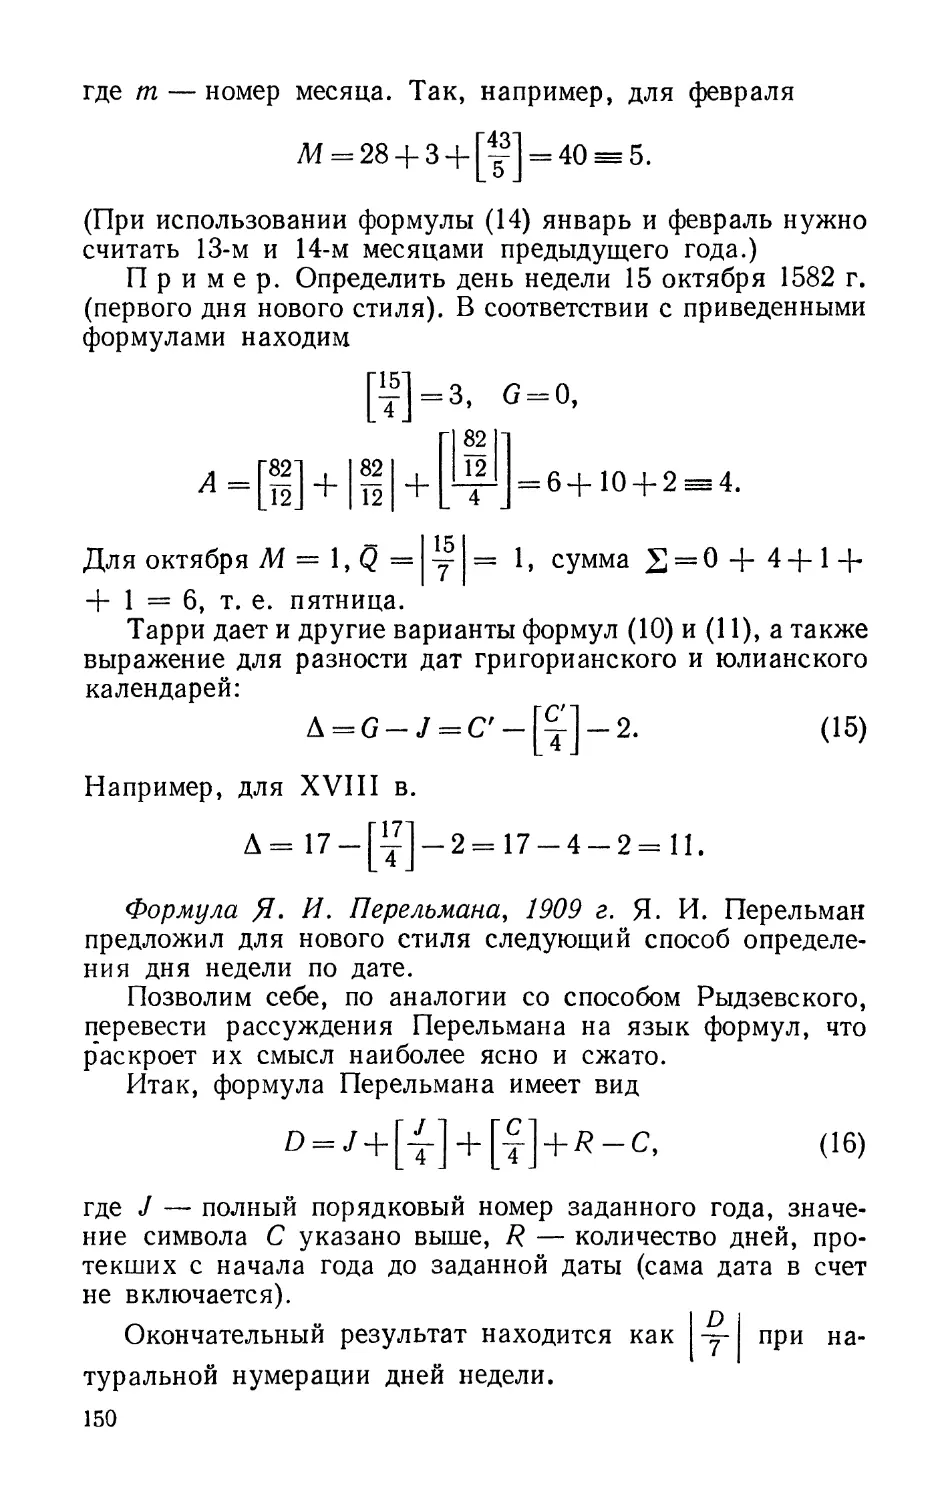 Формула Я. И. Перельмана, 1909 г.